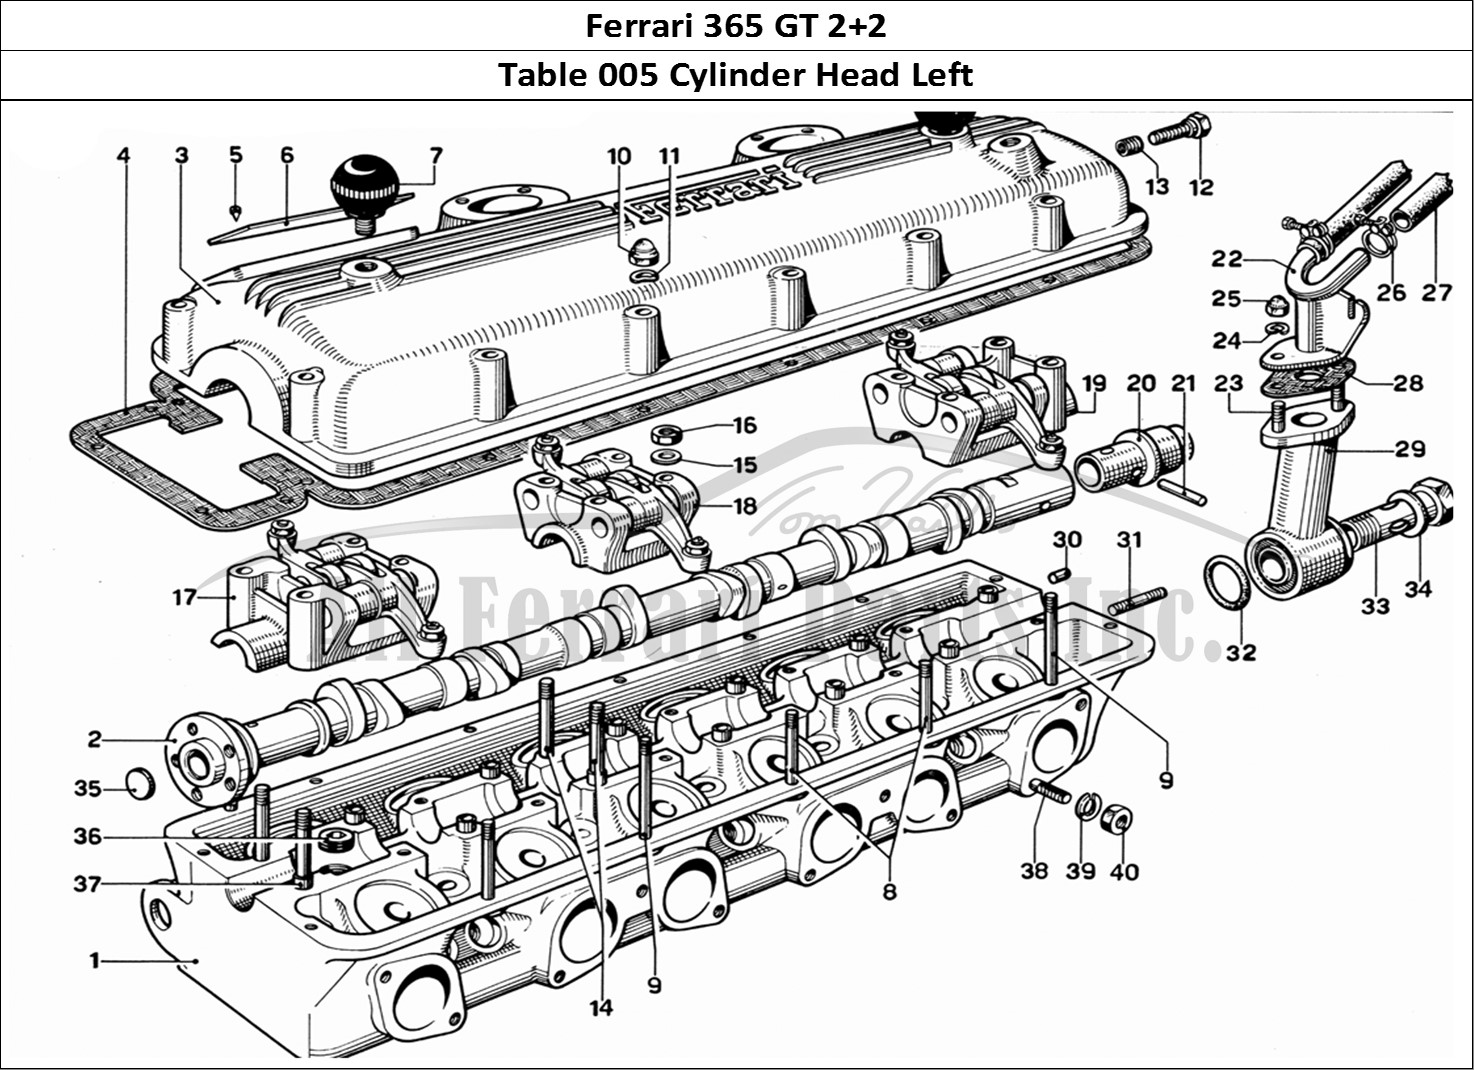 Ferrari Parts Ferrari 365 GT 2+2 (Mechanical) Page 005 Cylinder Head (Left)